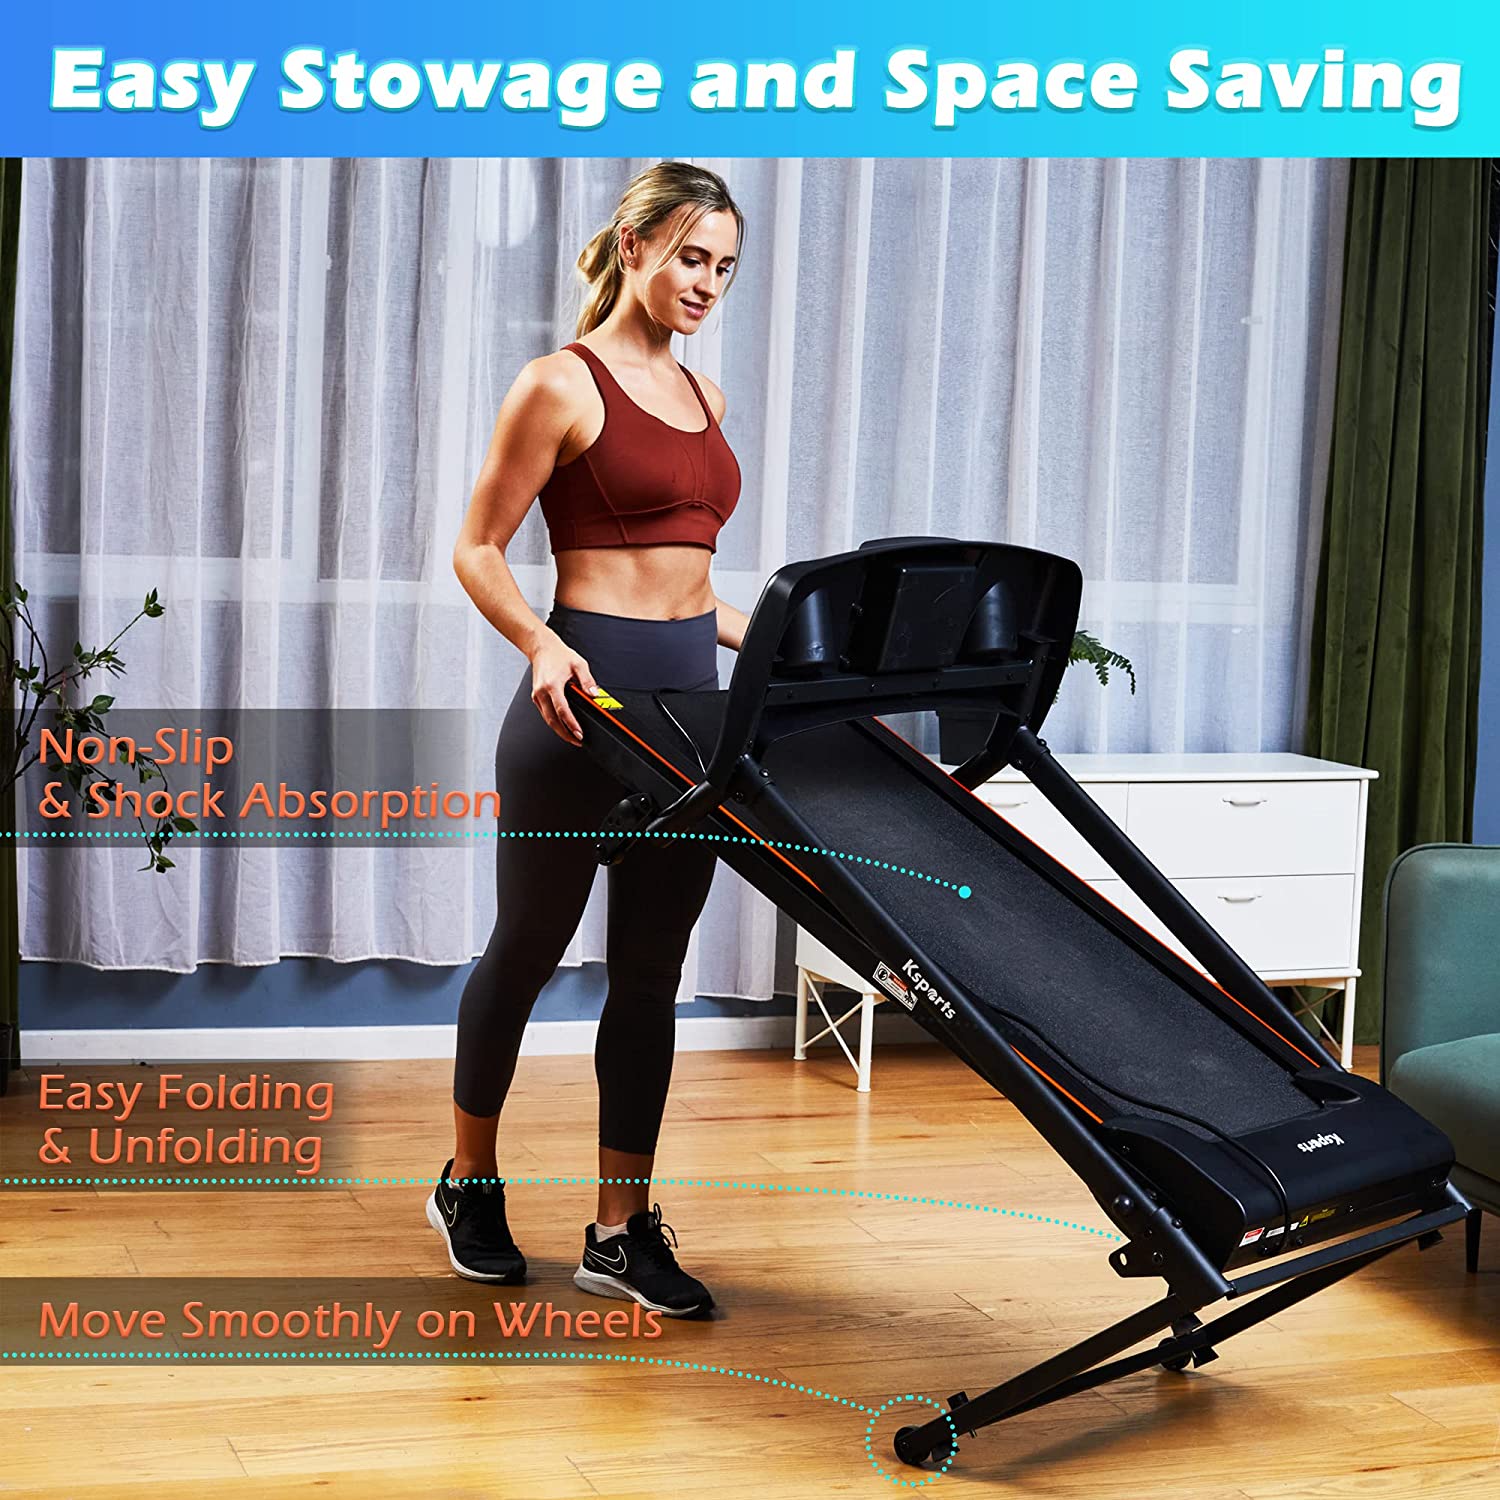 Ksport Multi-functional Treadmill Bundle (KSU5001)